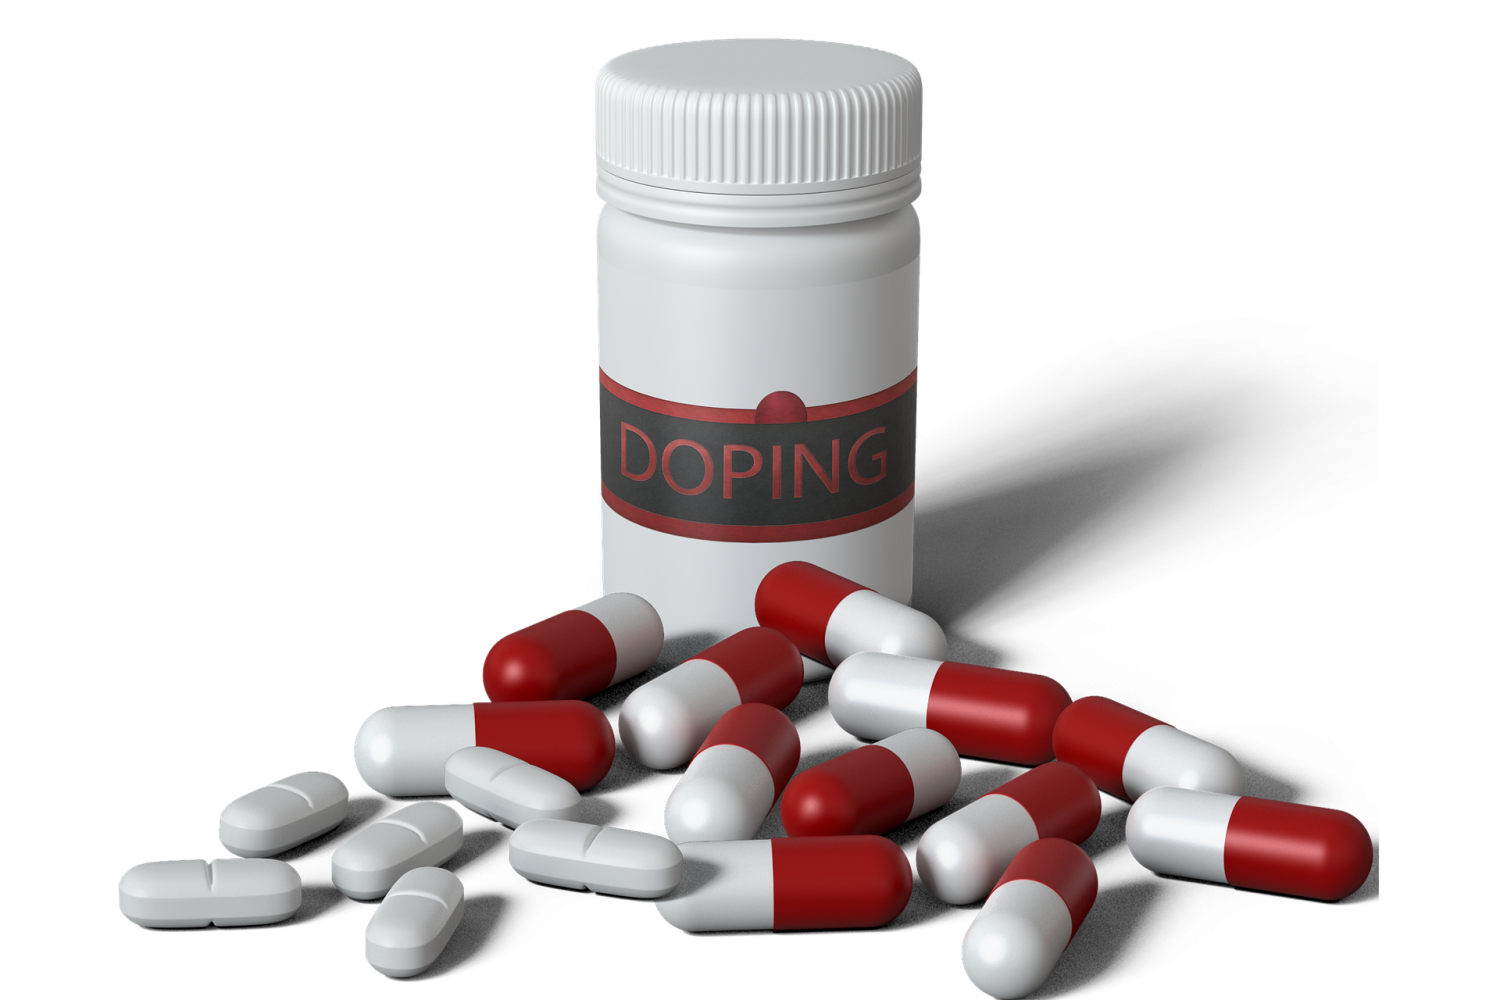 doping-3306819_1920